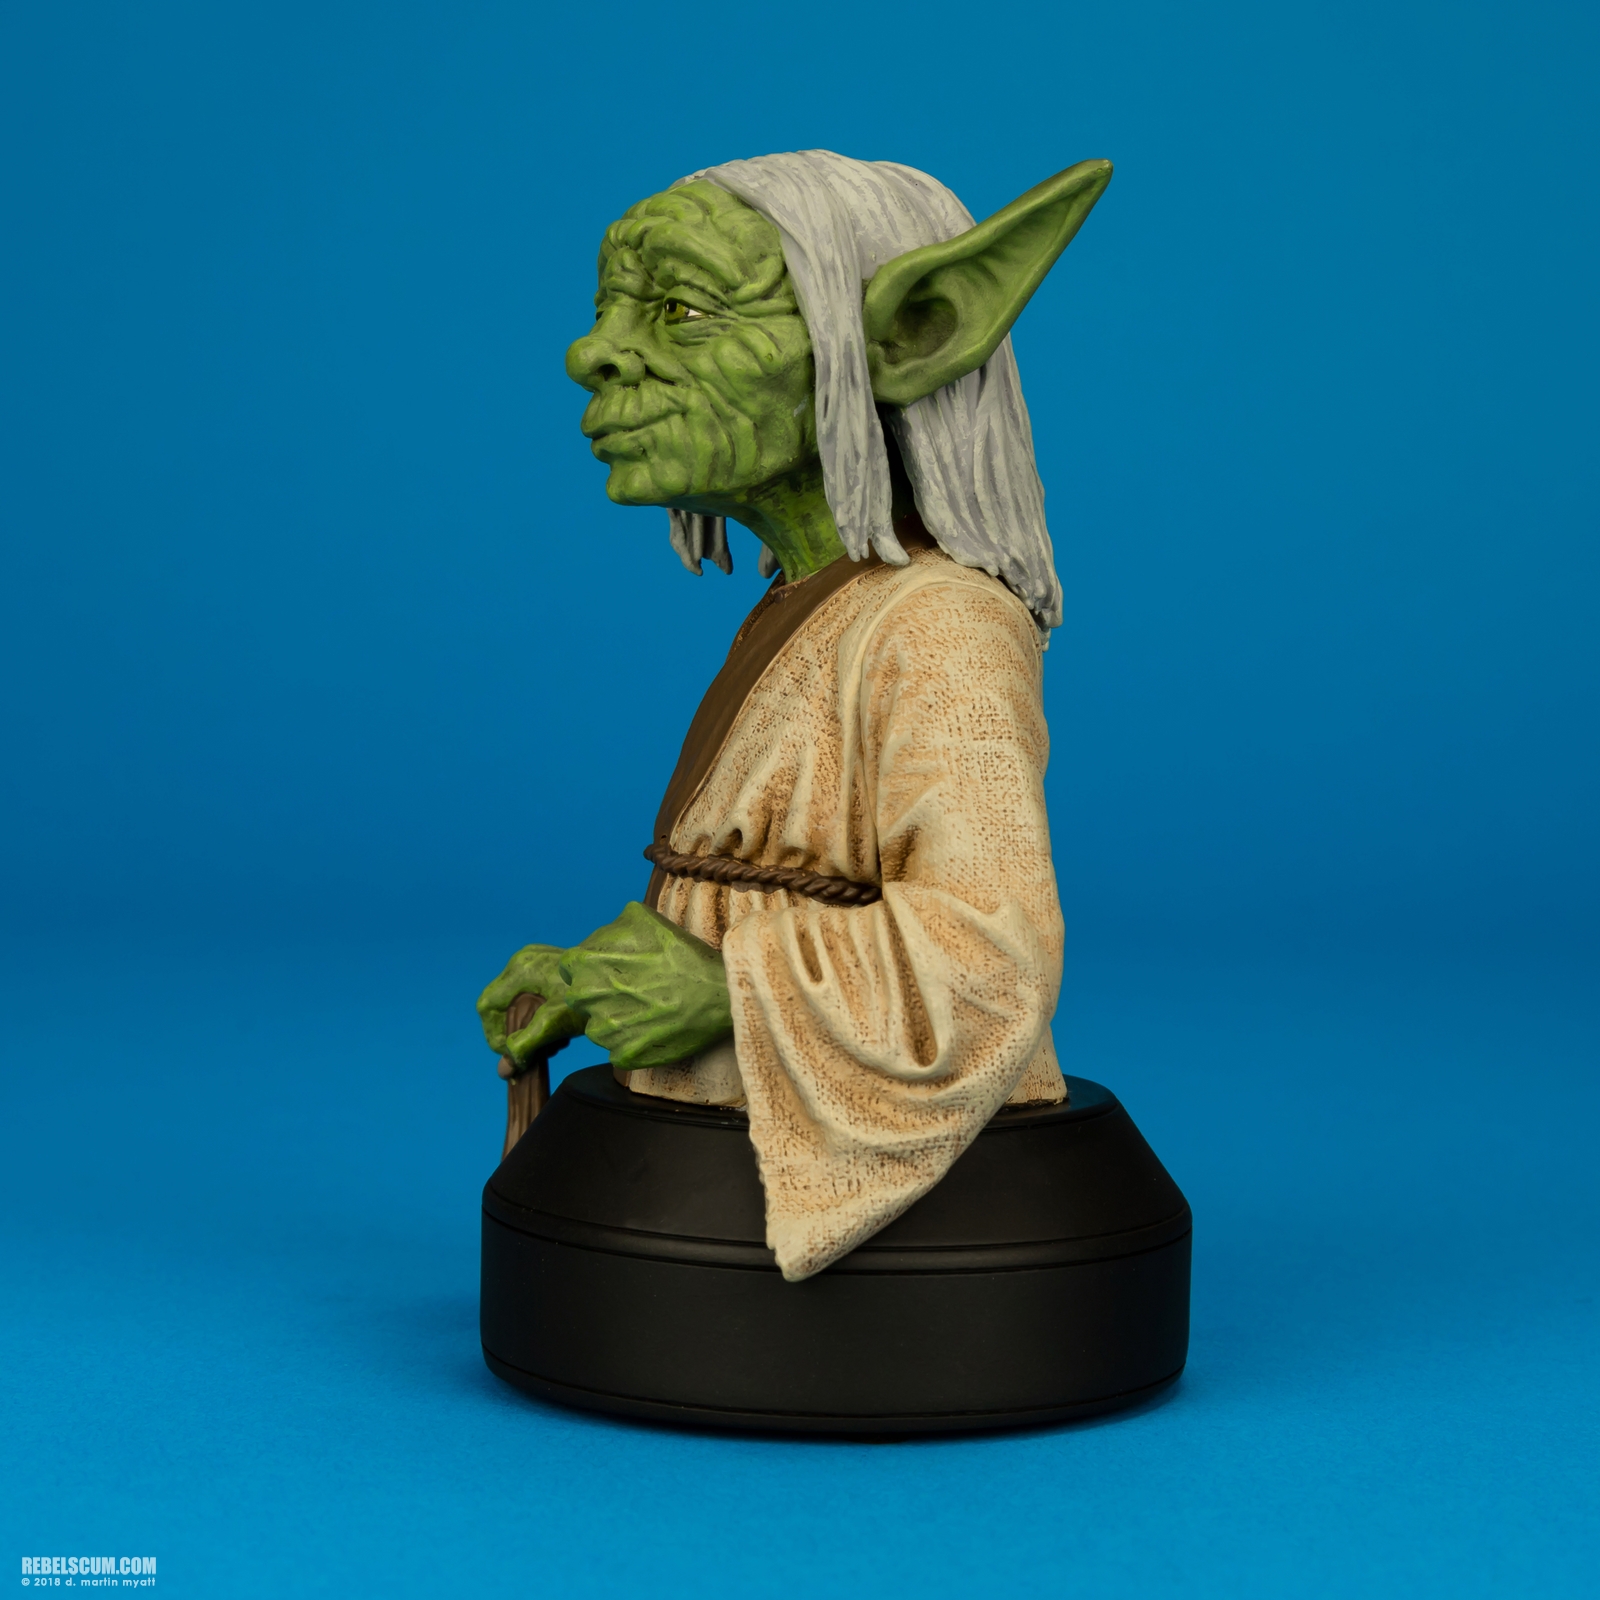 Yoda-Concept-Series-Mini-Bust-Gentle-Giant-Star-Wars-003.jpg